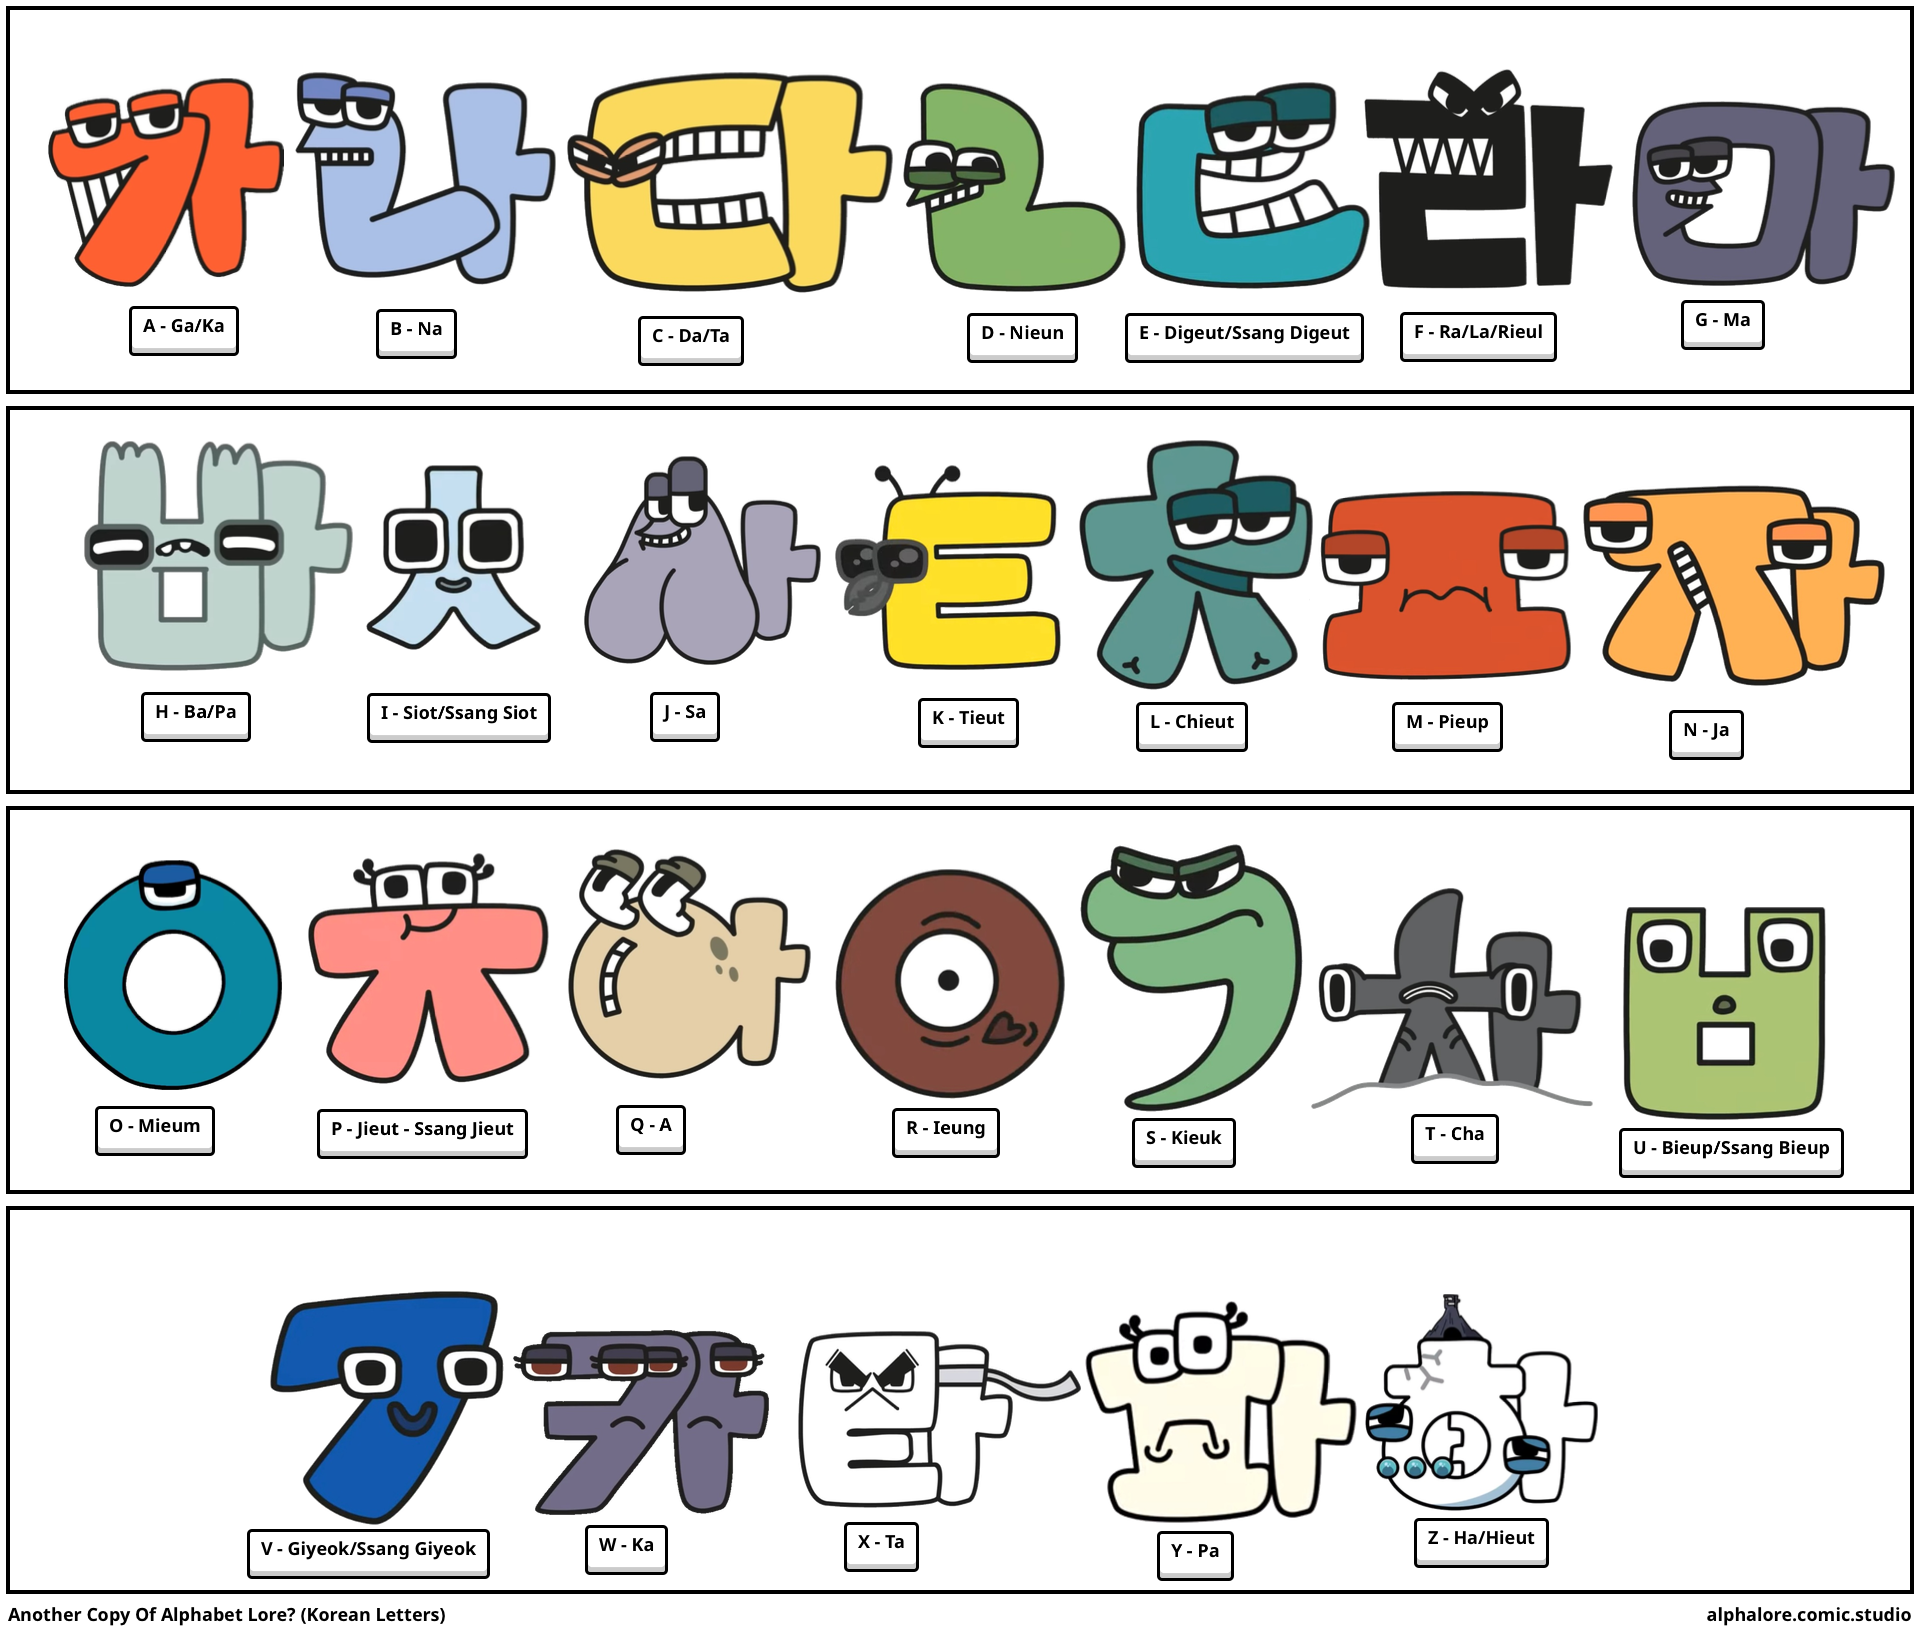 Another Copy Of Alphabet Lore? (Korean Letters) - Comic Studio